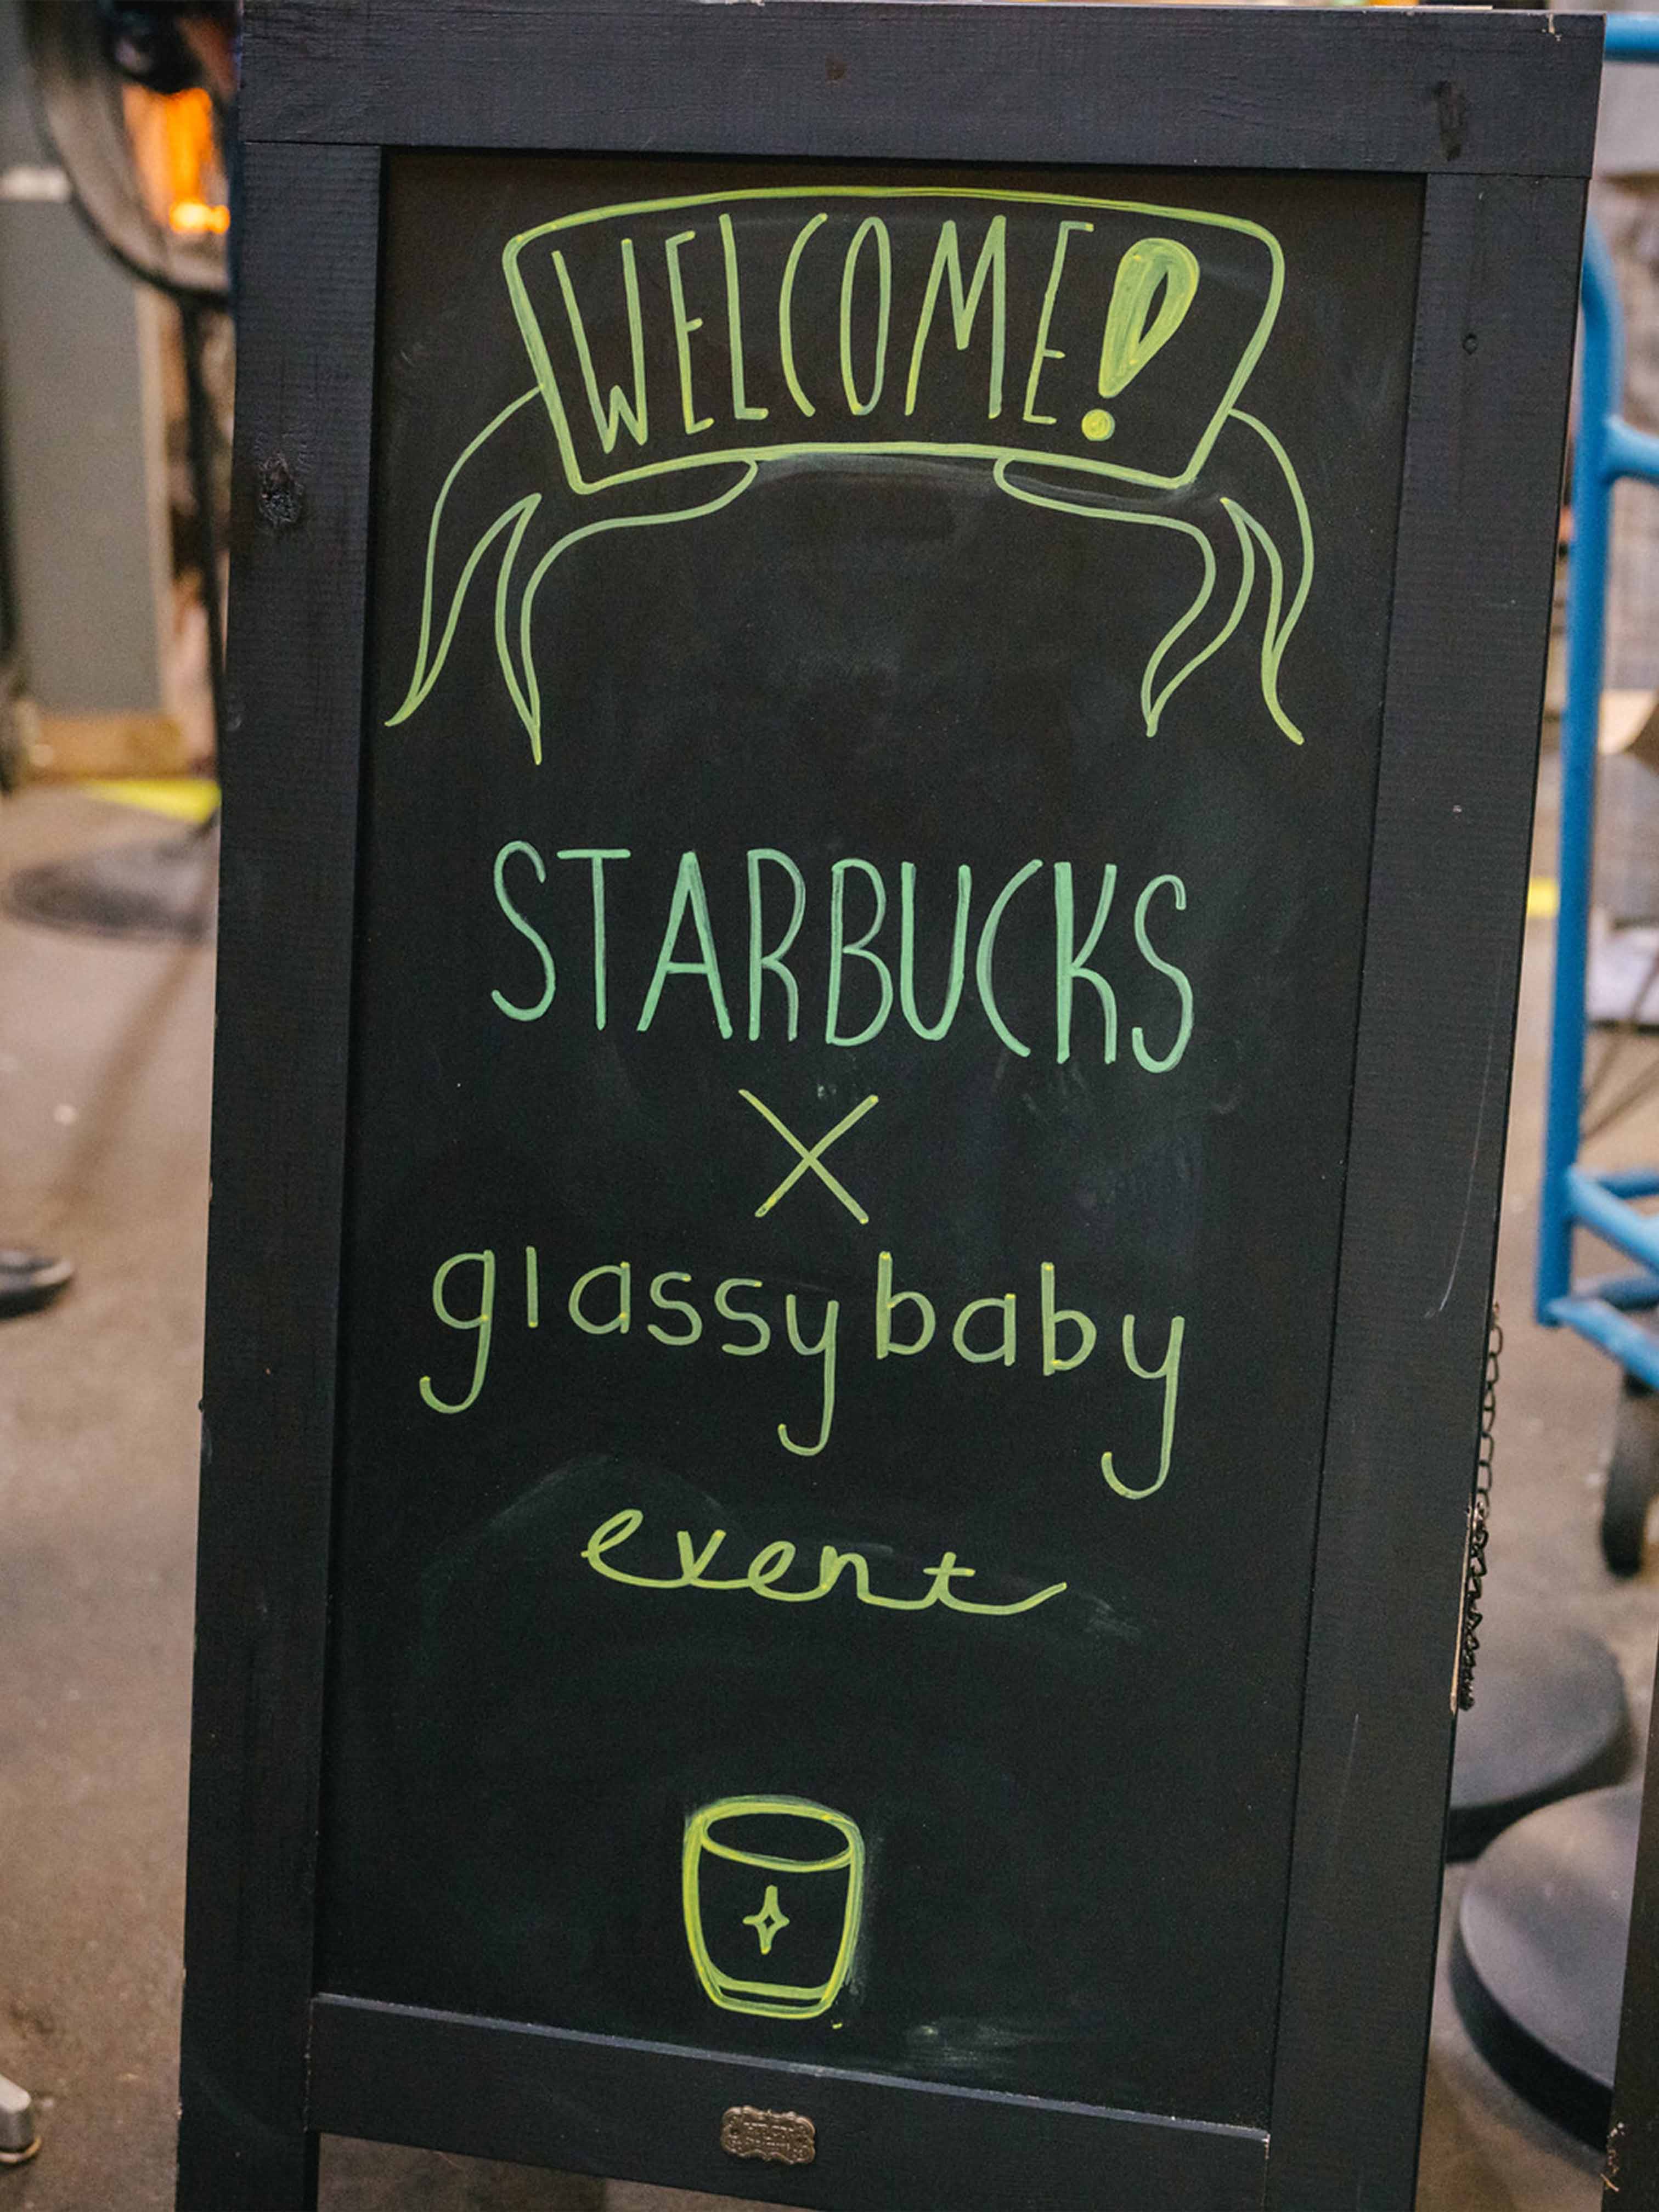 Private Starbucks event sign